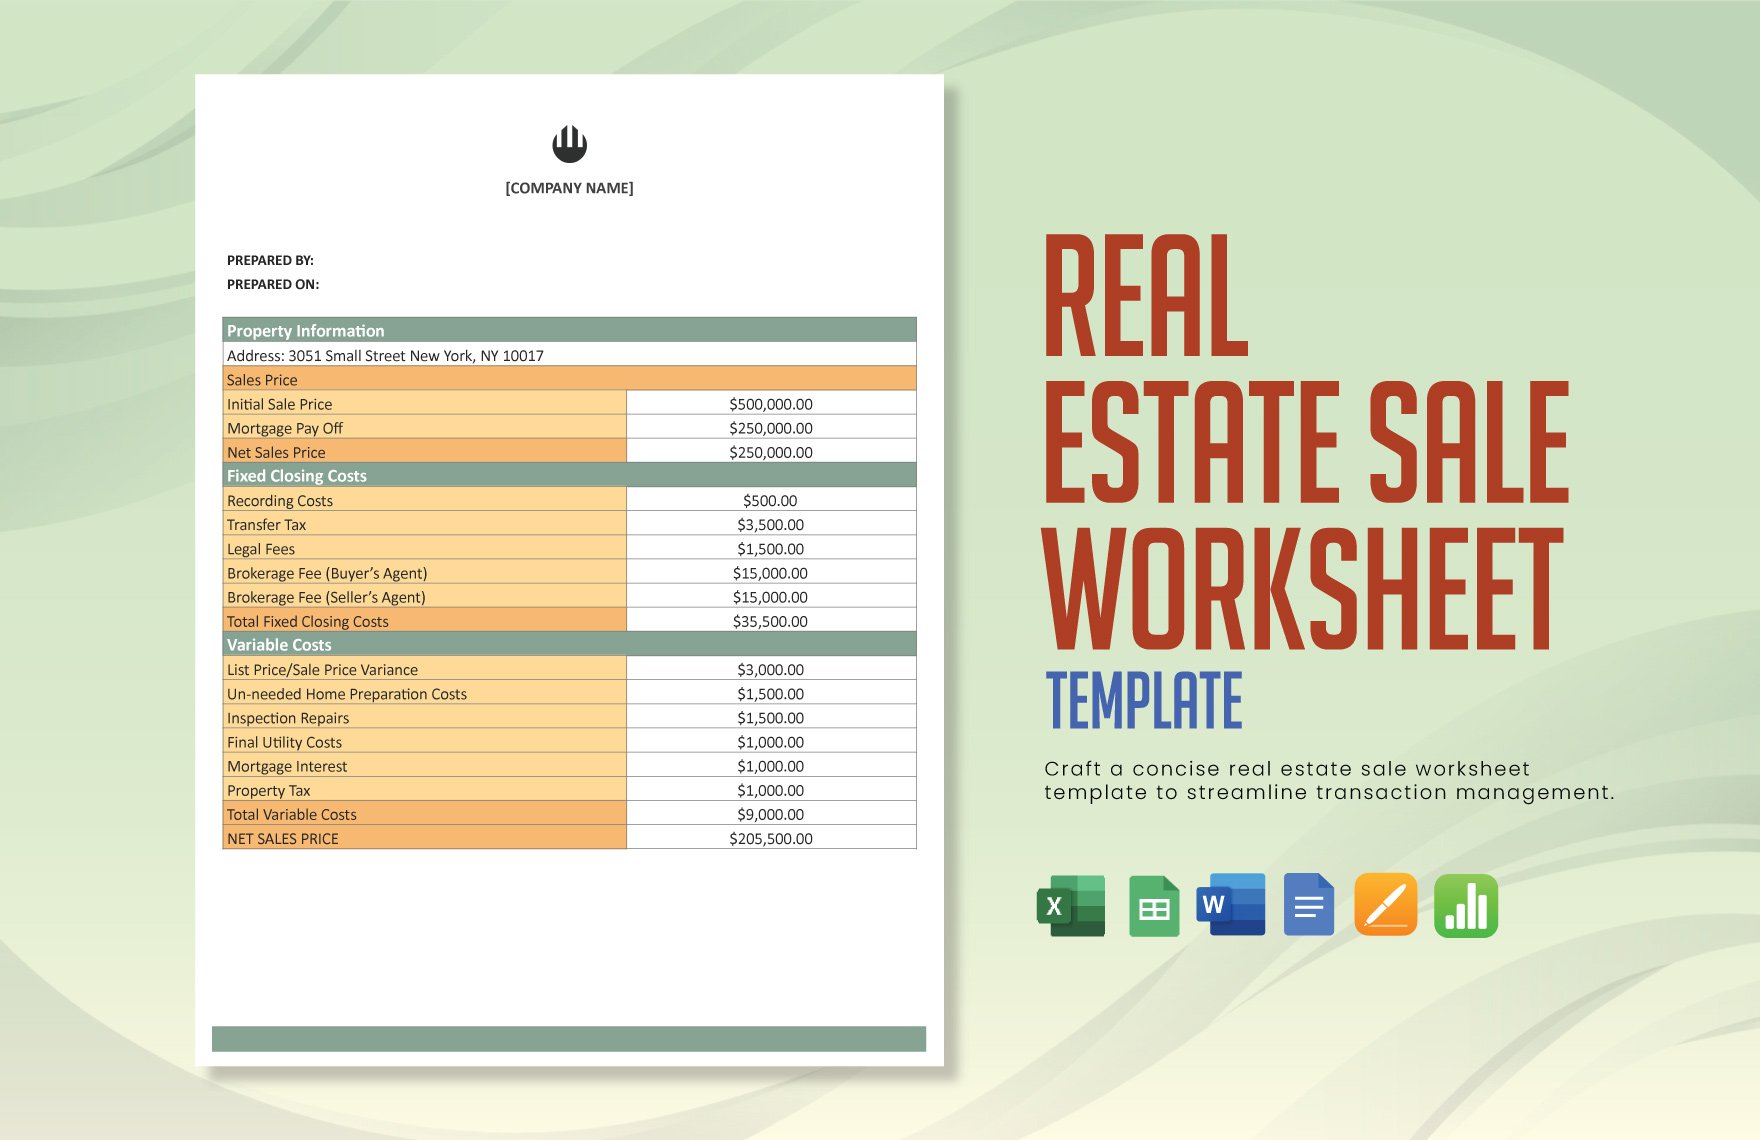 Real Estate Sale Worksheet Template in Word, Google Docs, Excel, PDF, Google Sheets, Apple Numbers